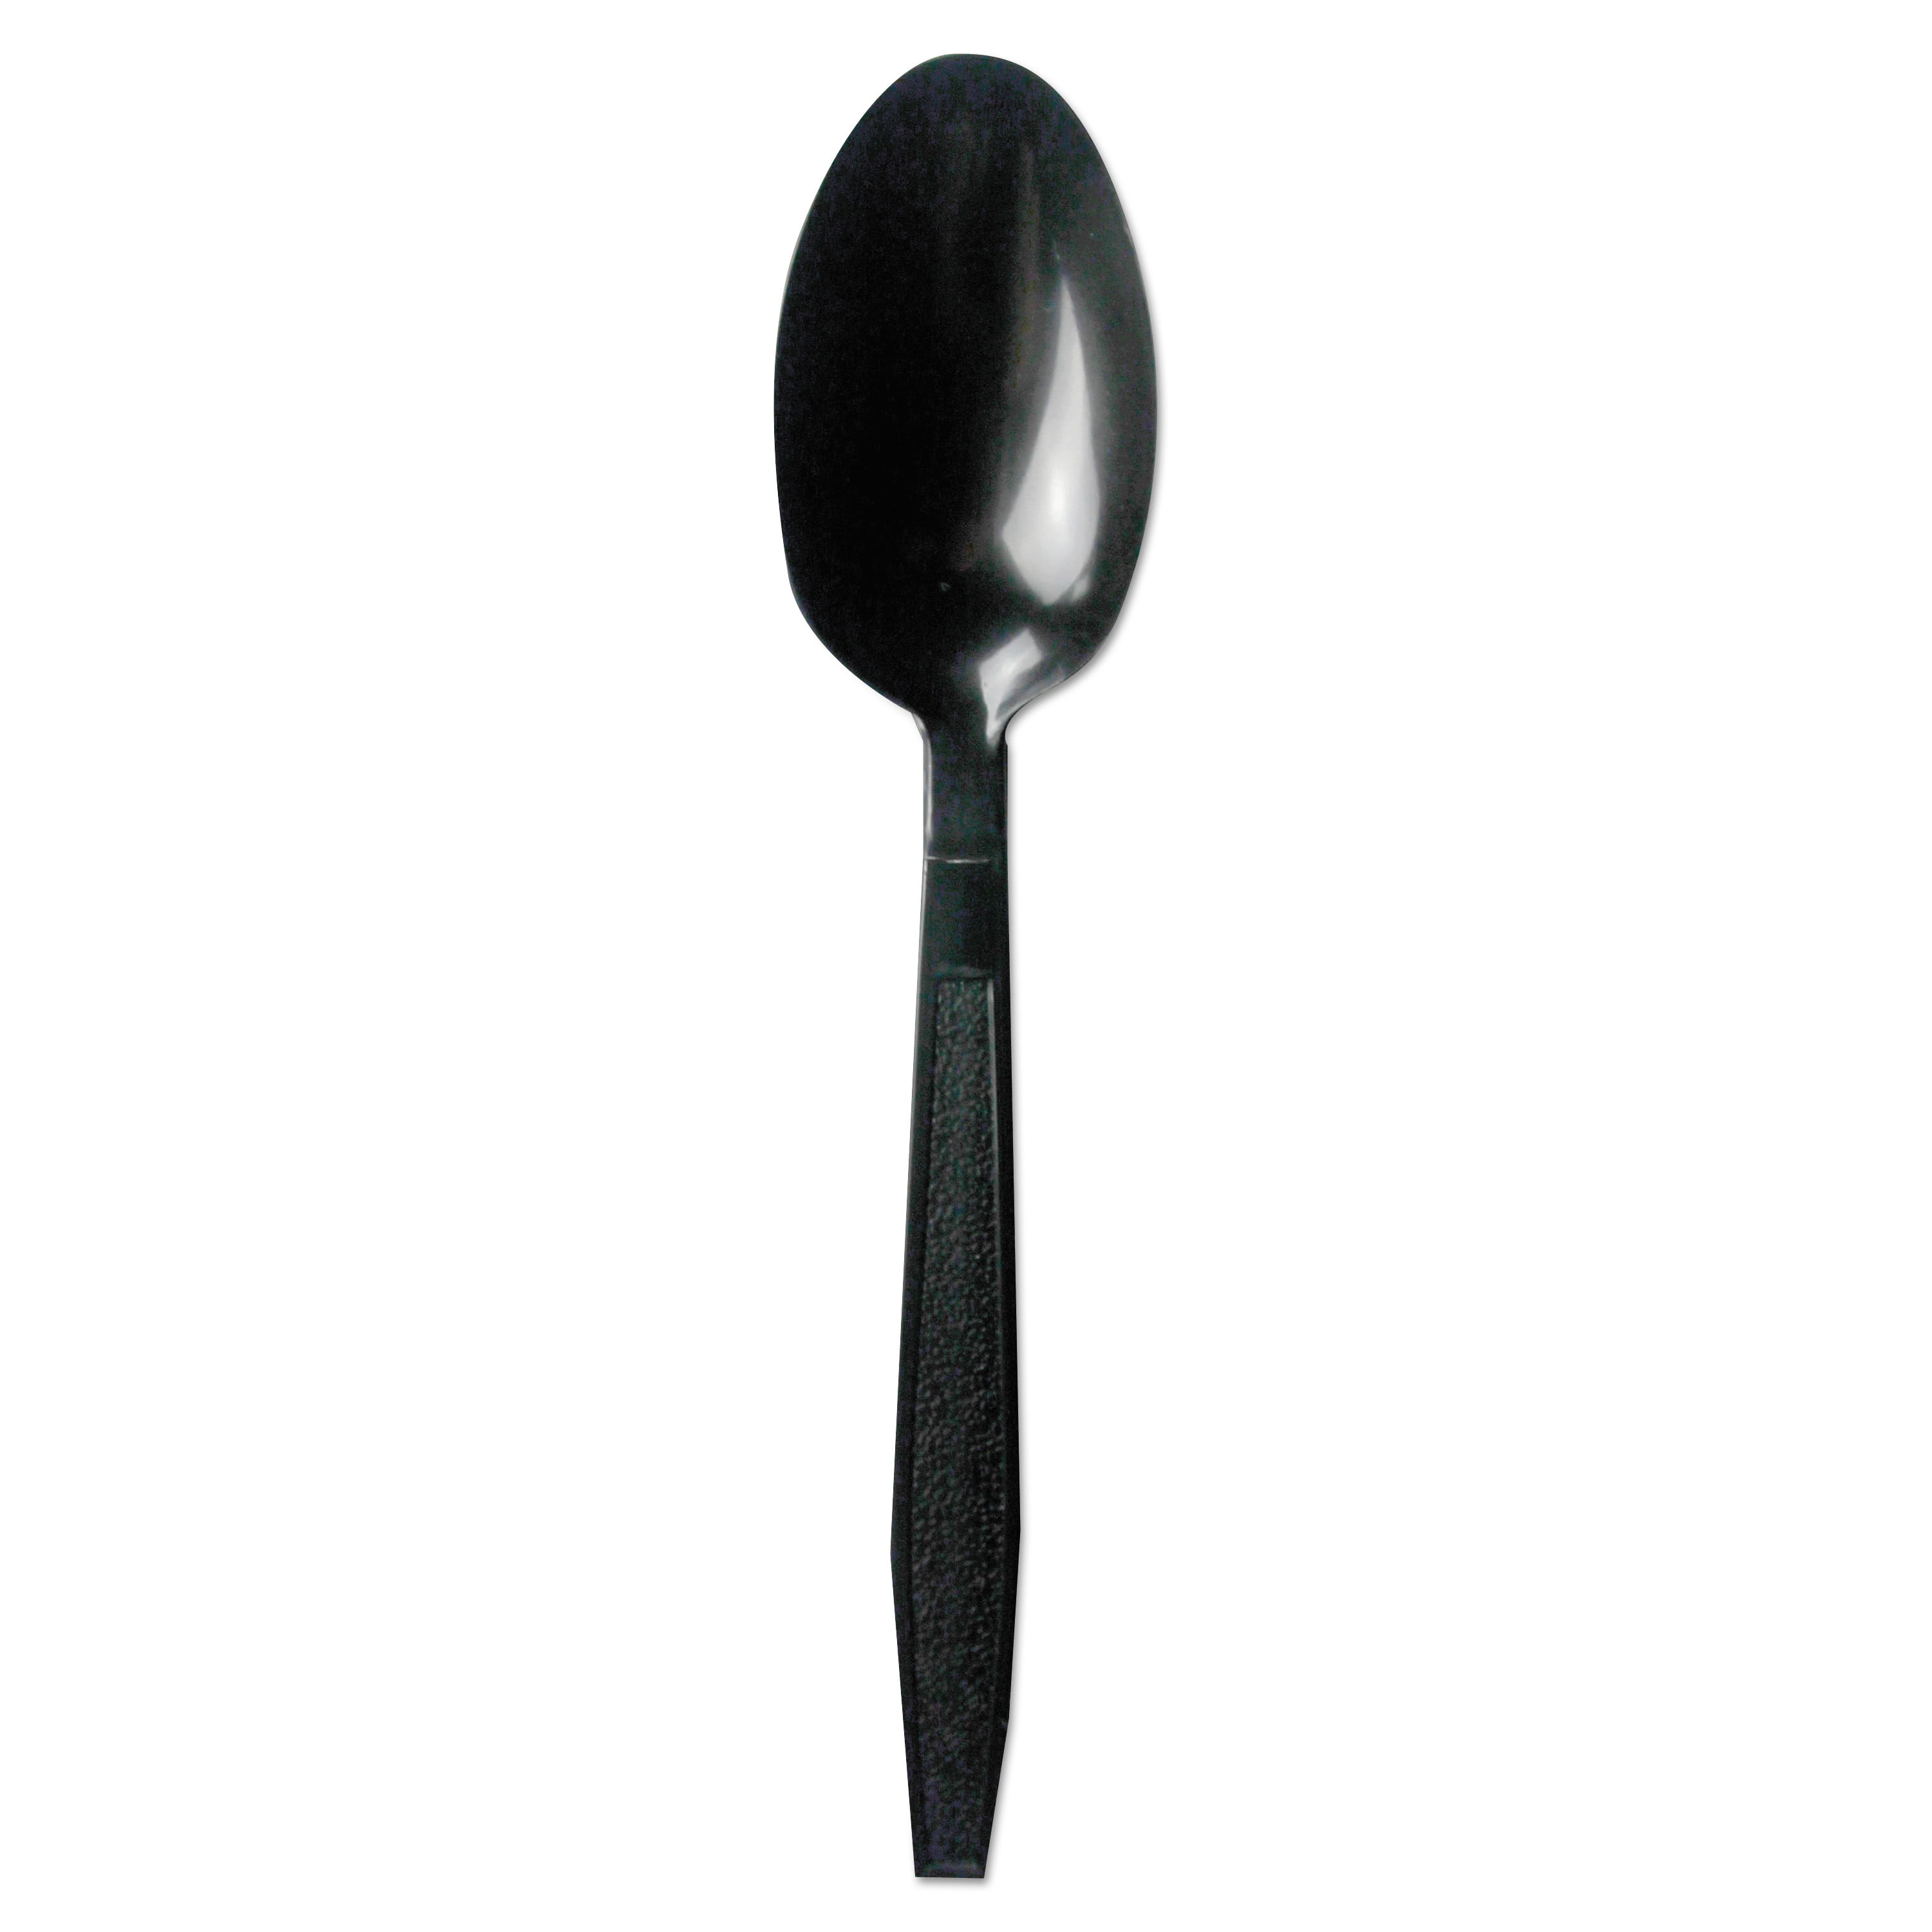 1000 x Plastic Dessert Spoons Cutlery 